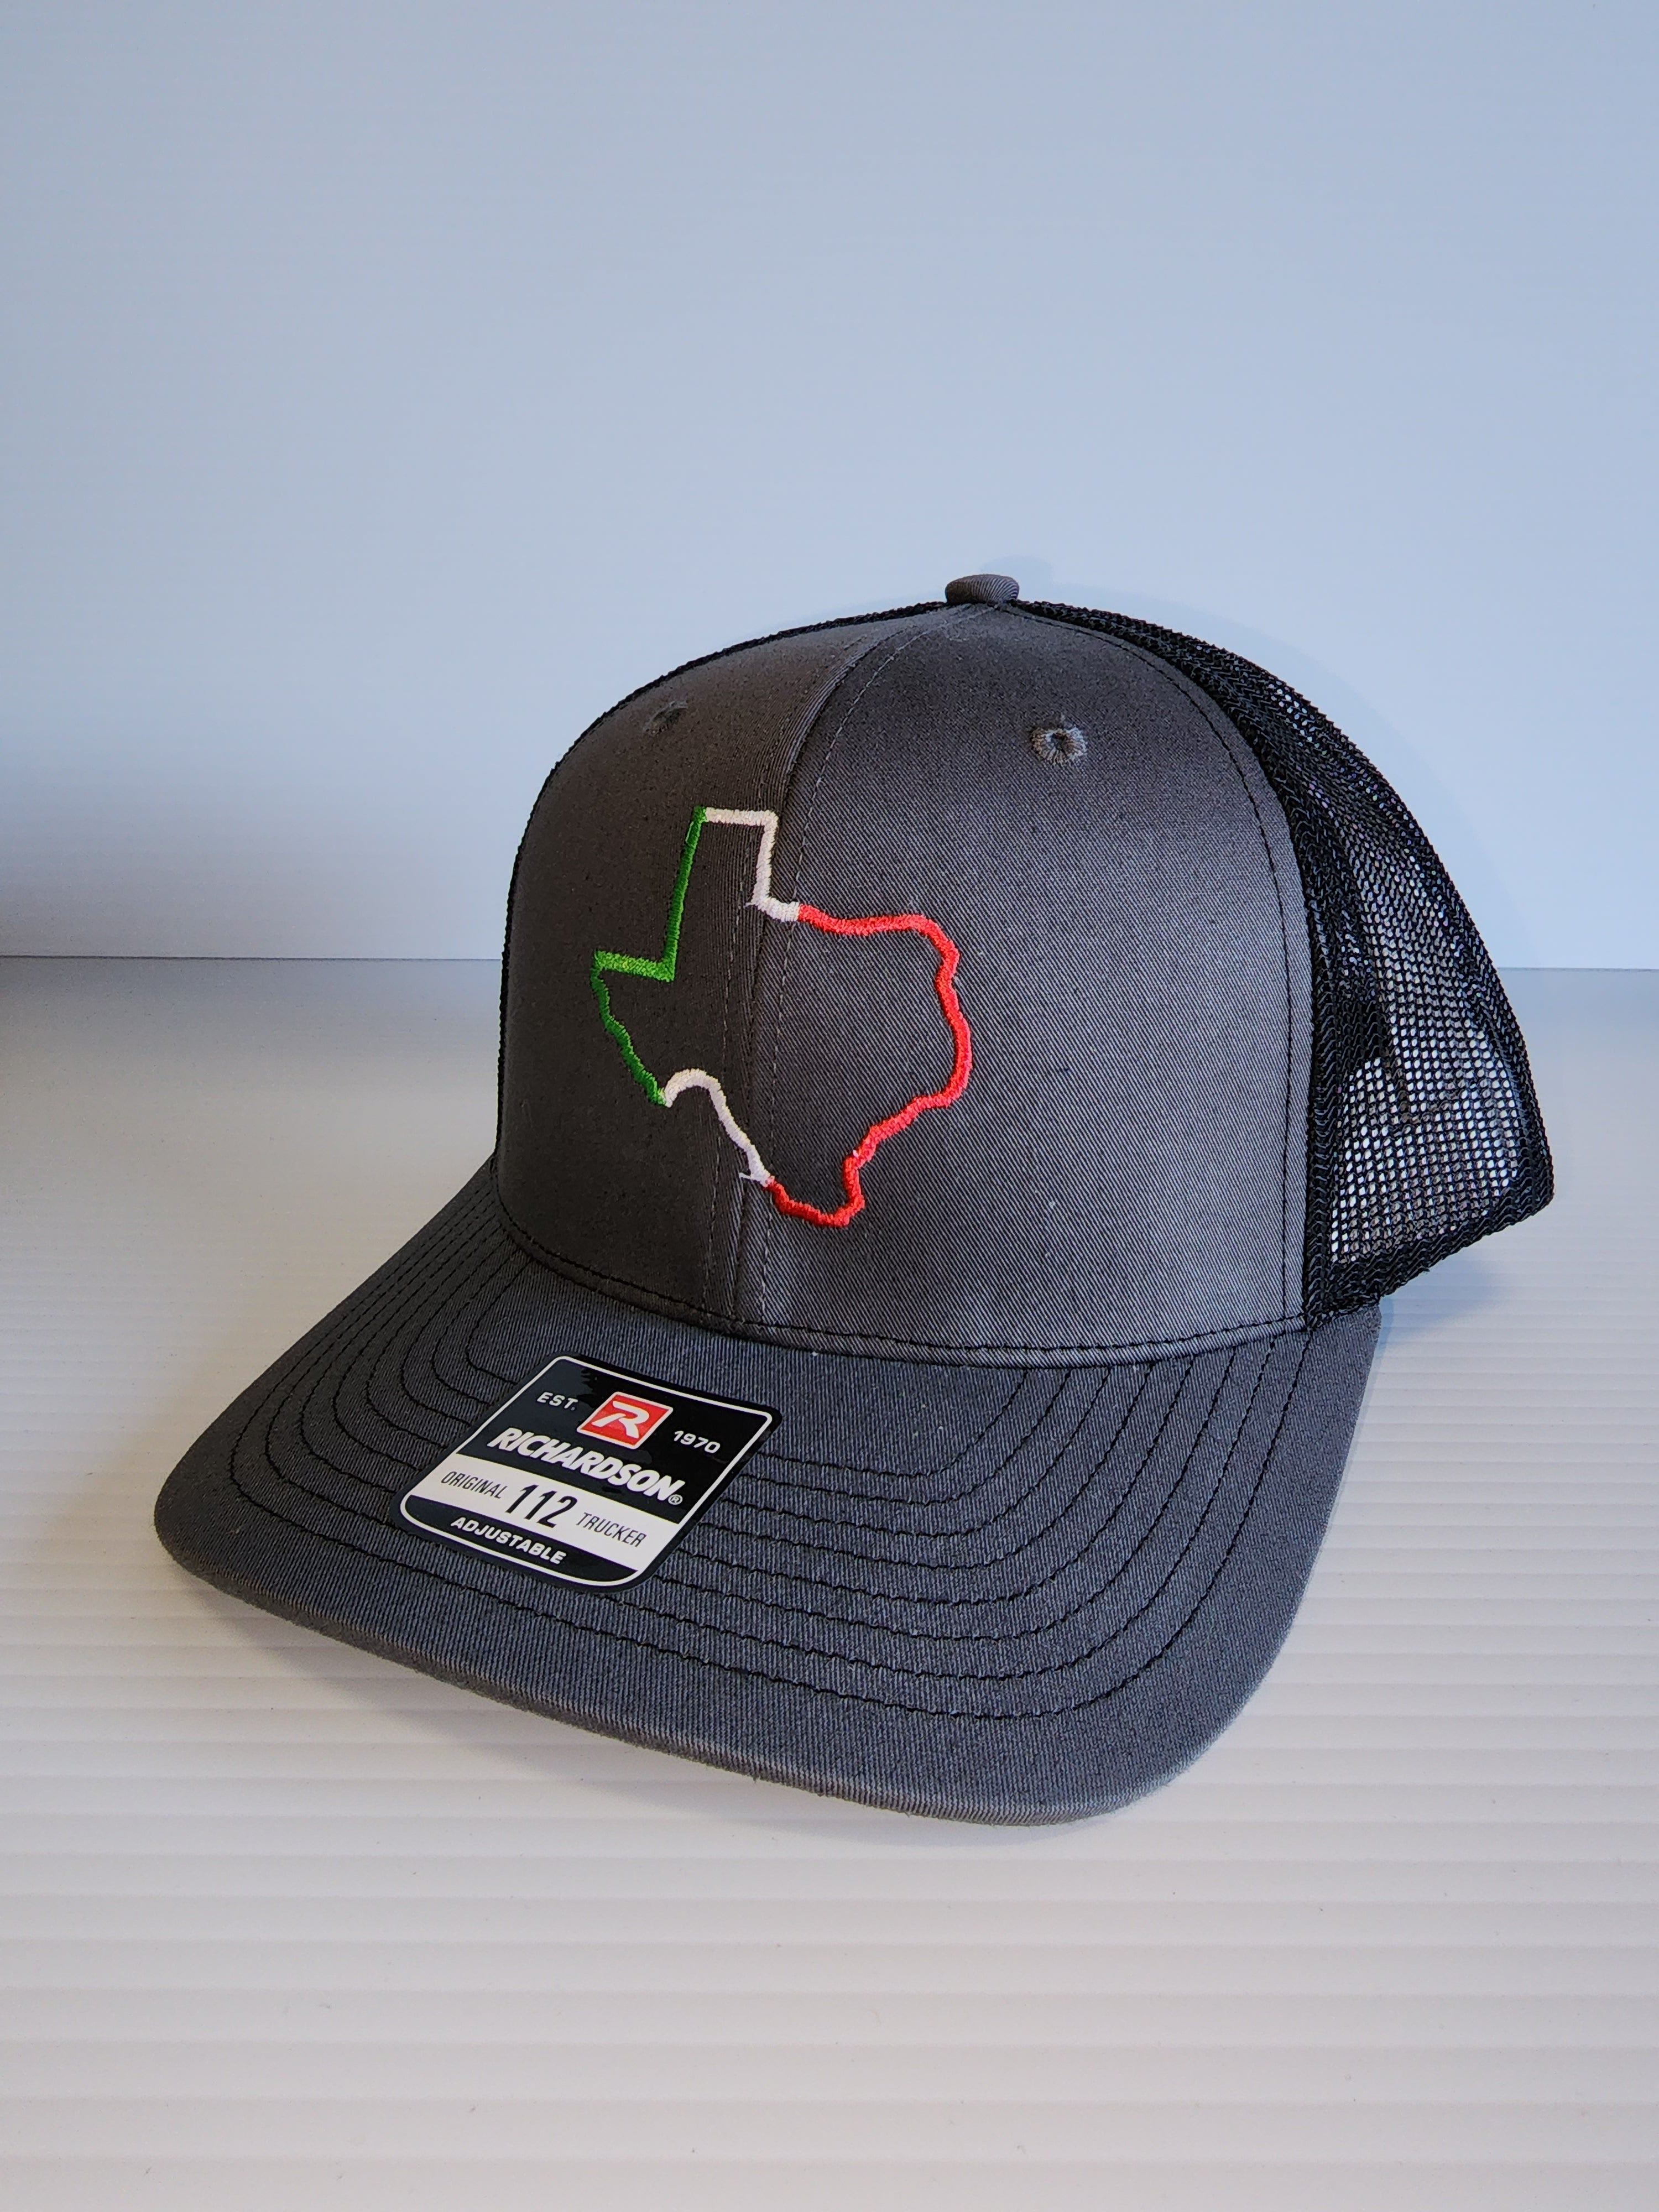 Mexico Themed Texas Grey/Black Trucker Cap